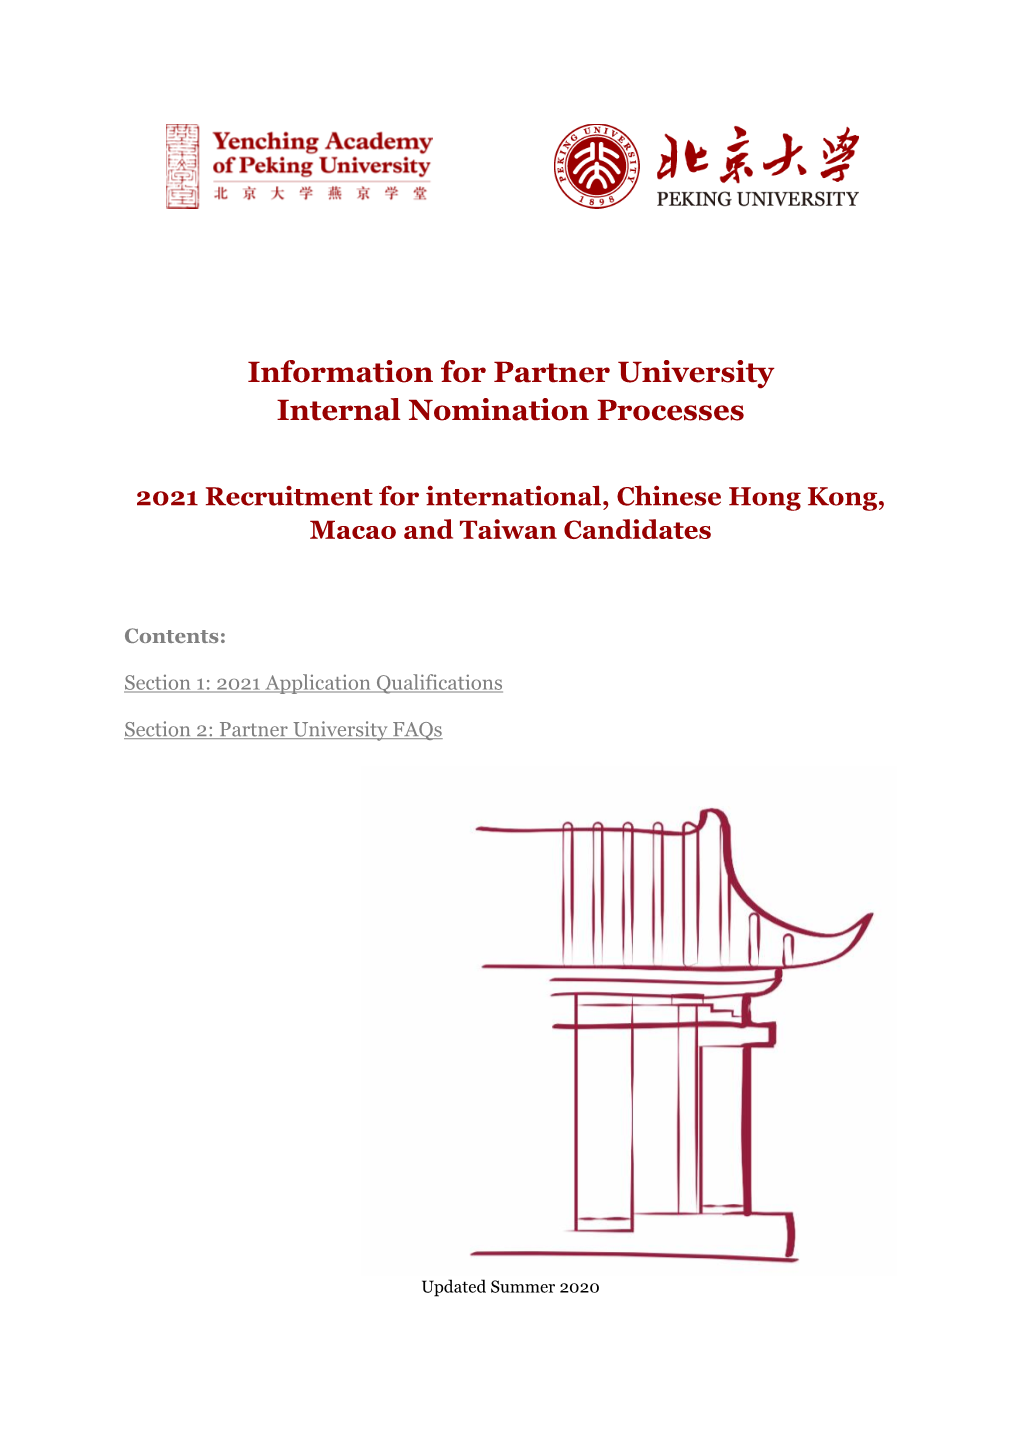 Information for Partner University Internal Nomination Processes